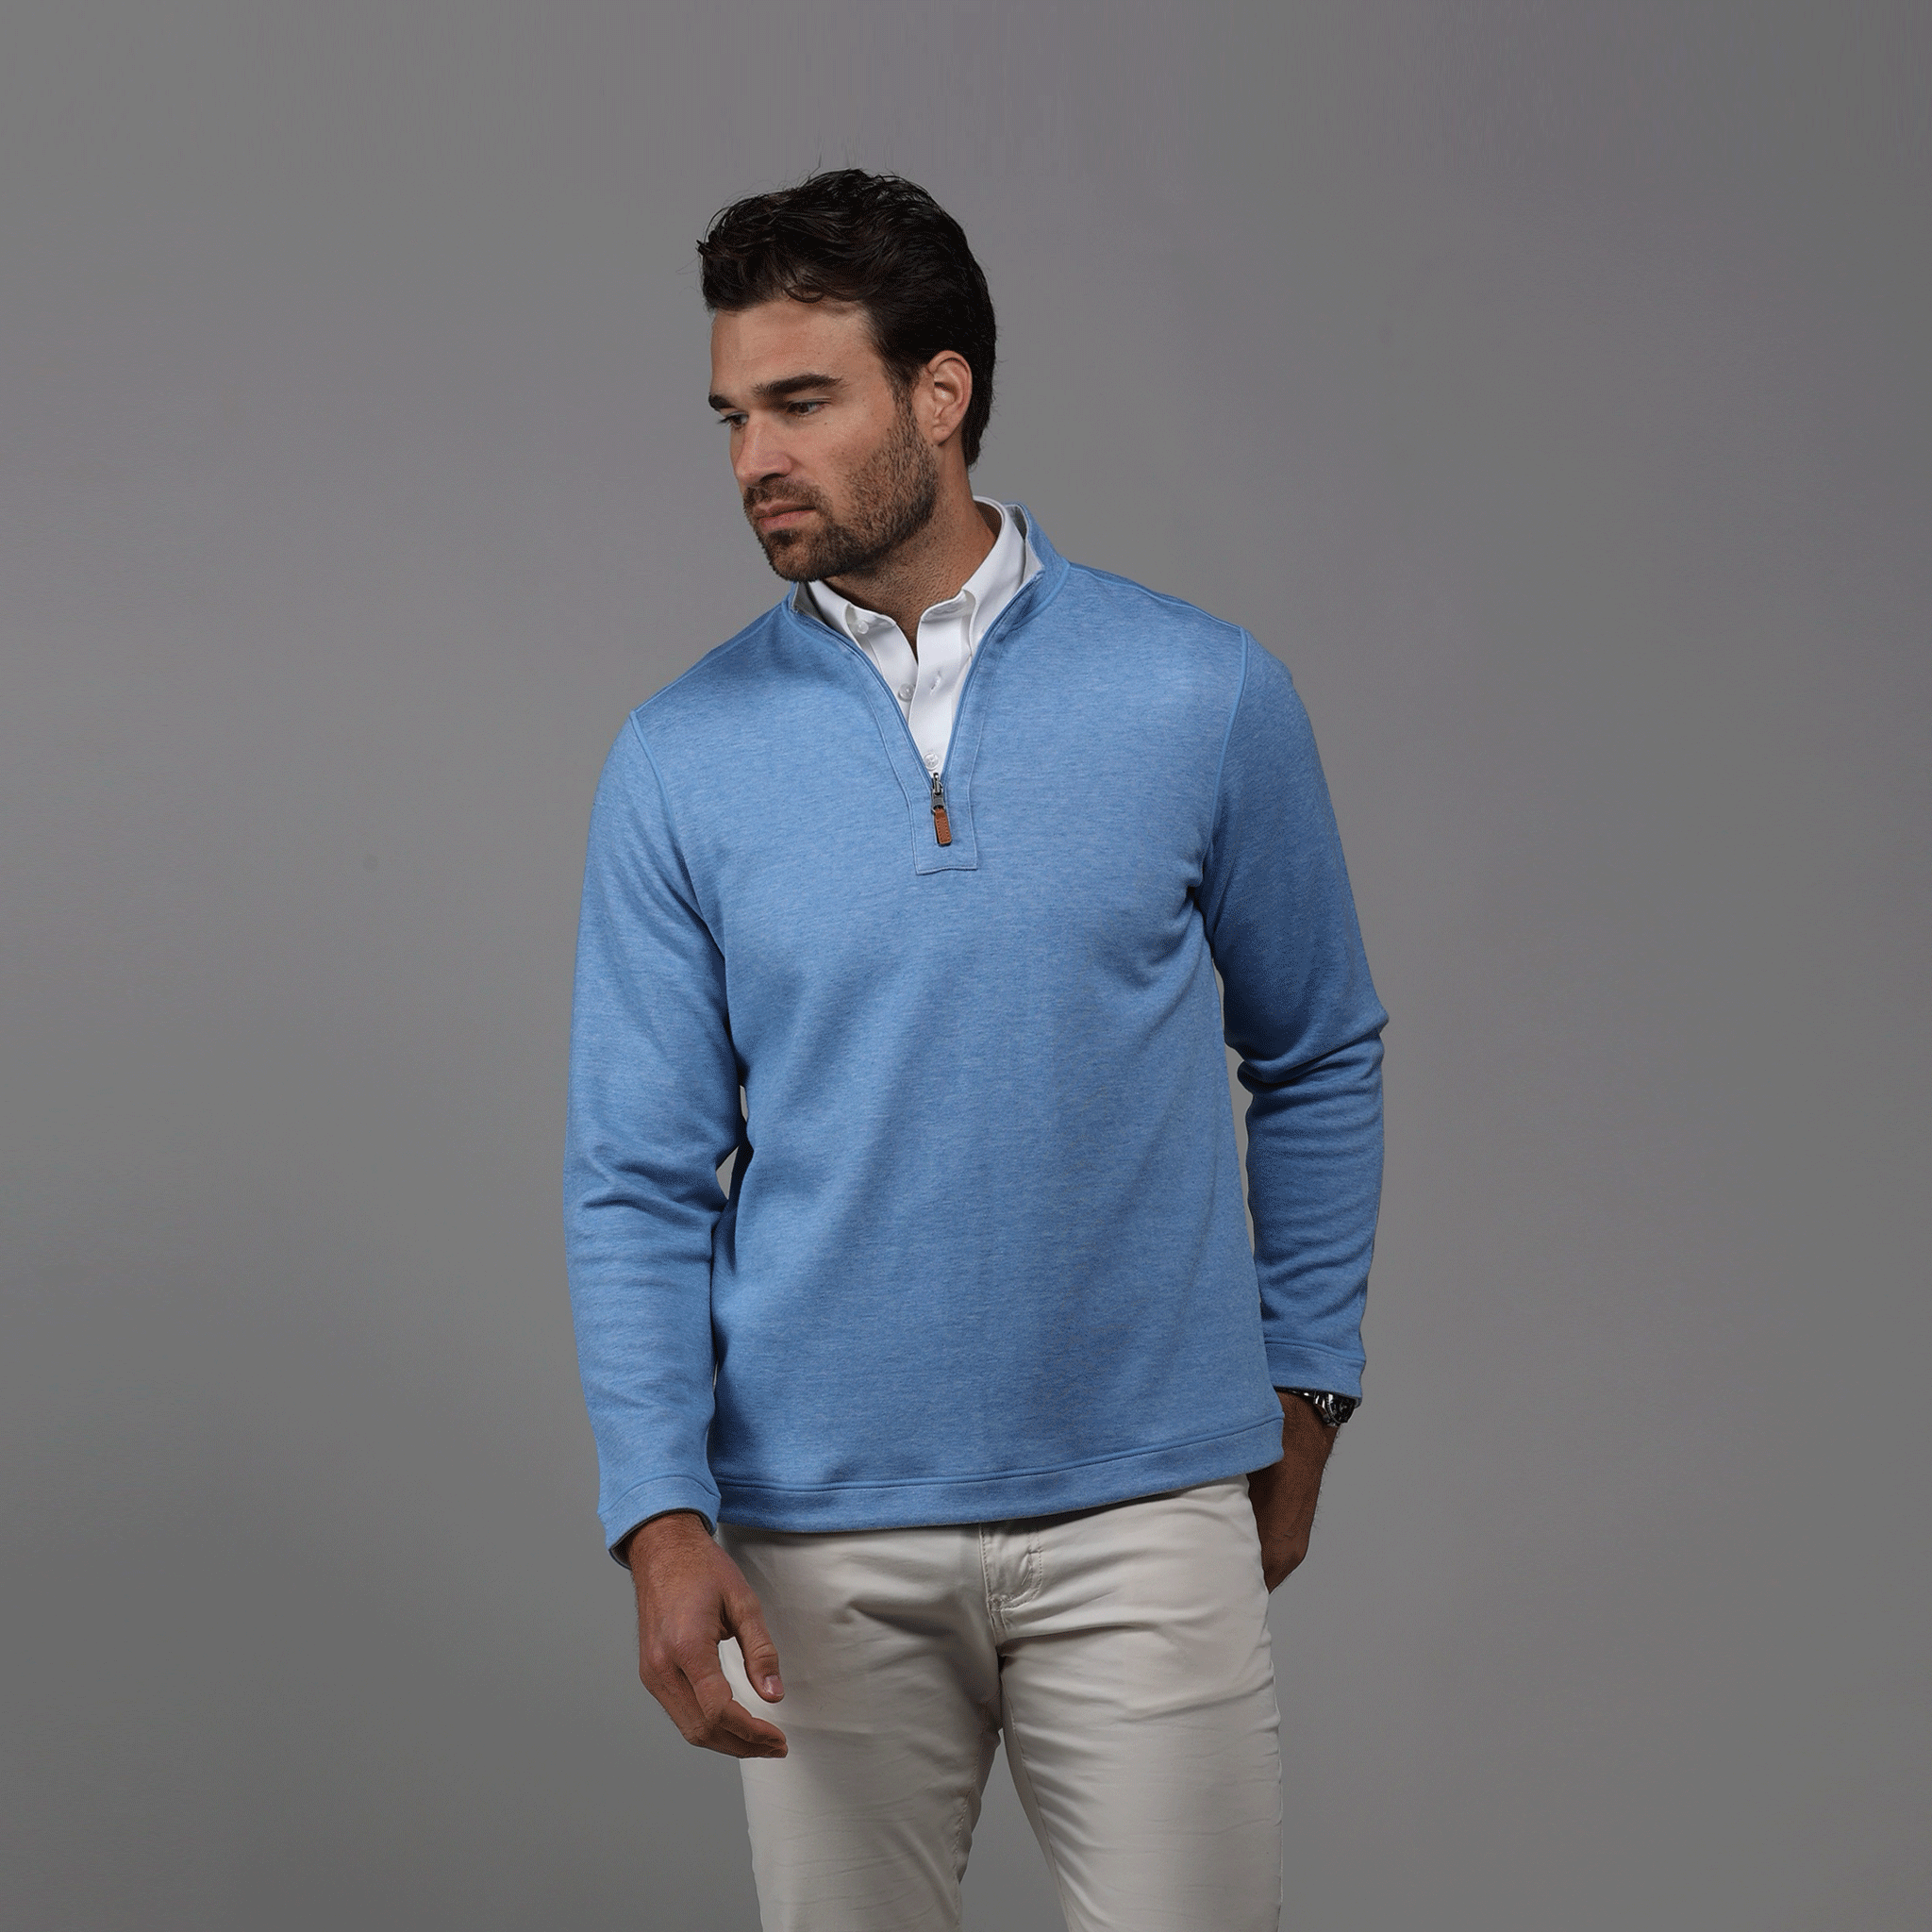 Sky Blue and Light Zen Blend & Reversible Cotton Pullov Collars Zip Grey – Quarter